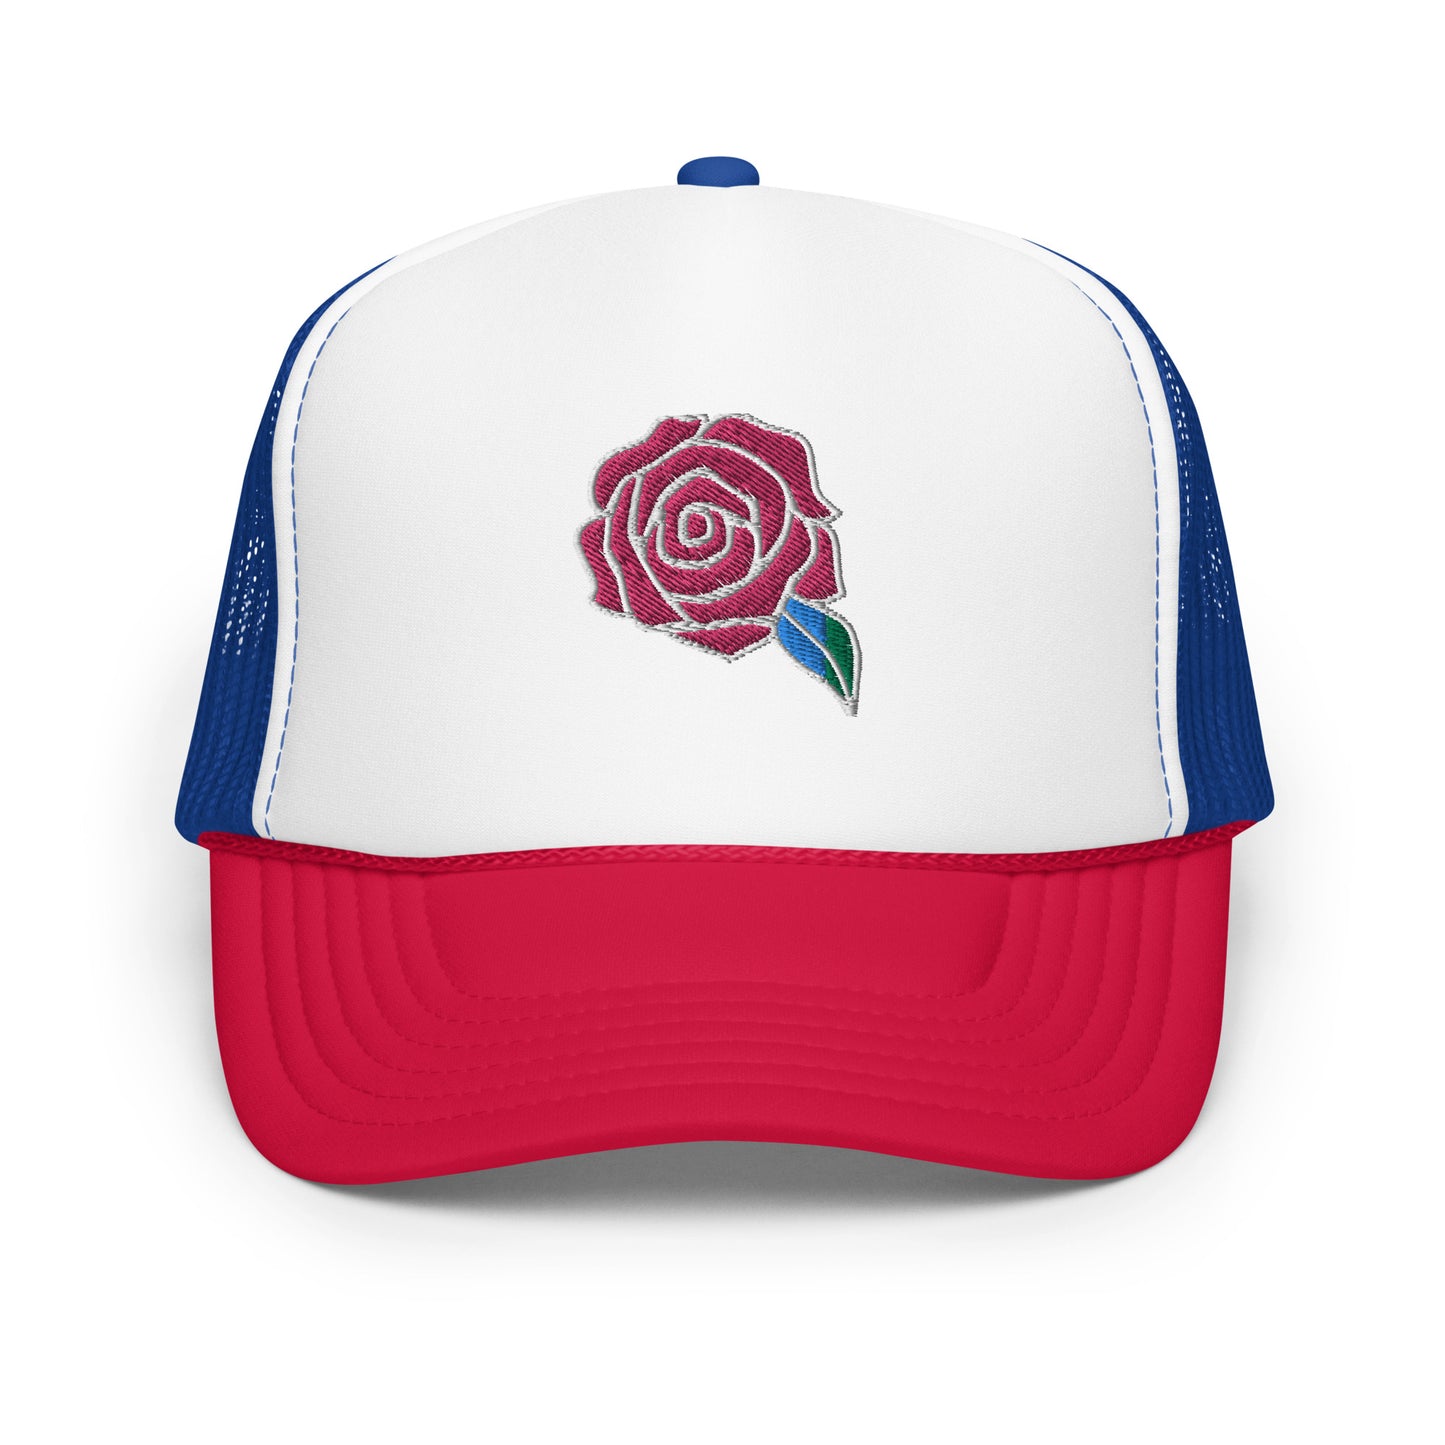 Hats - Pink Rose